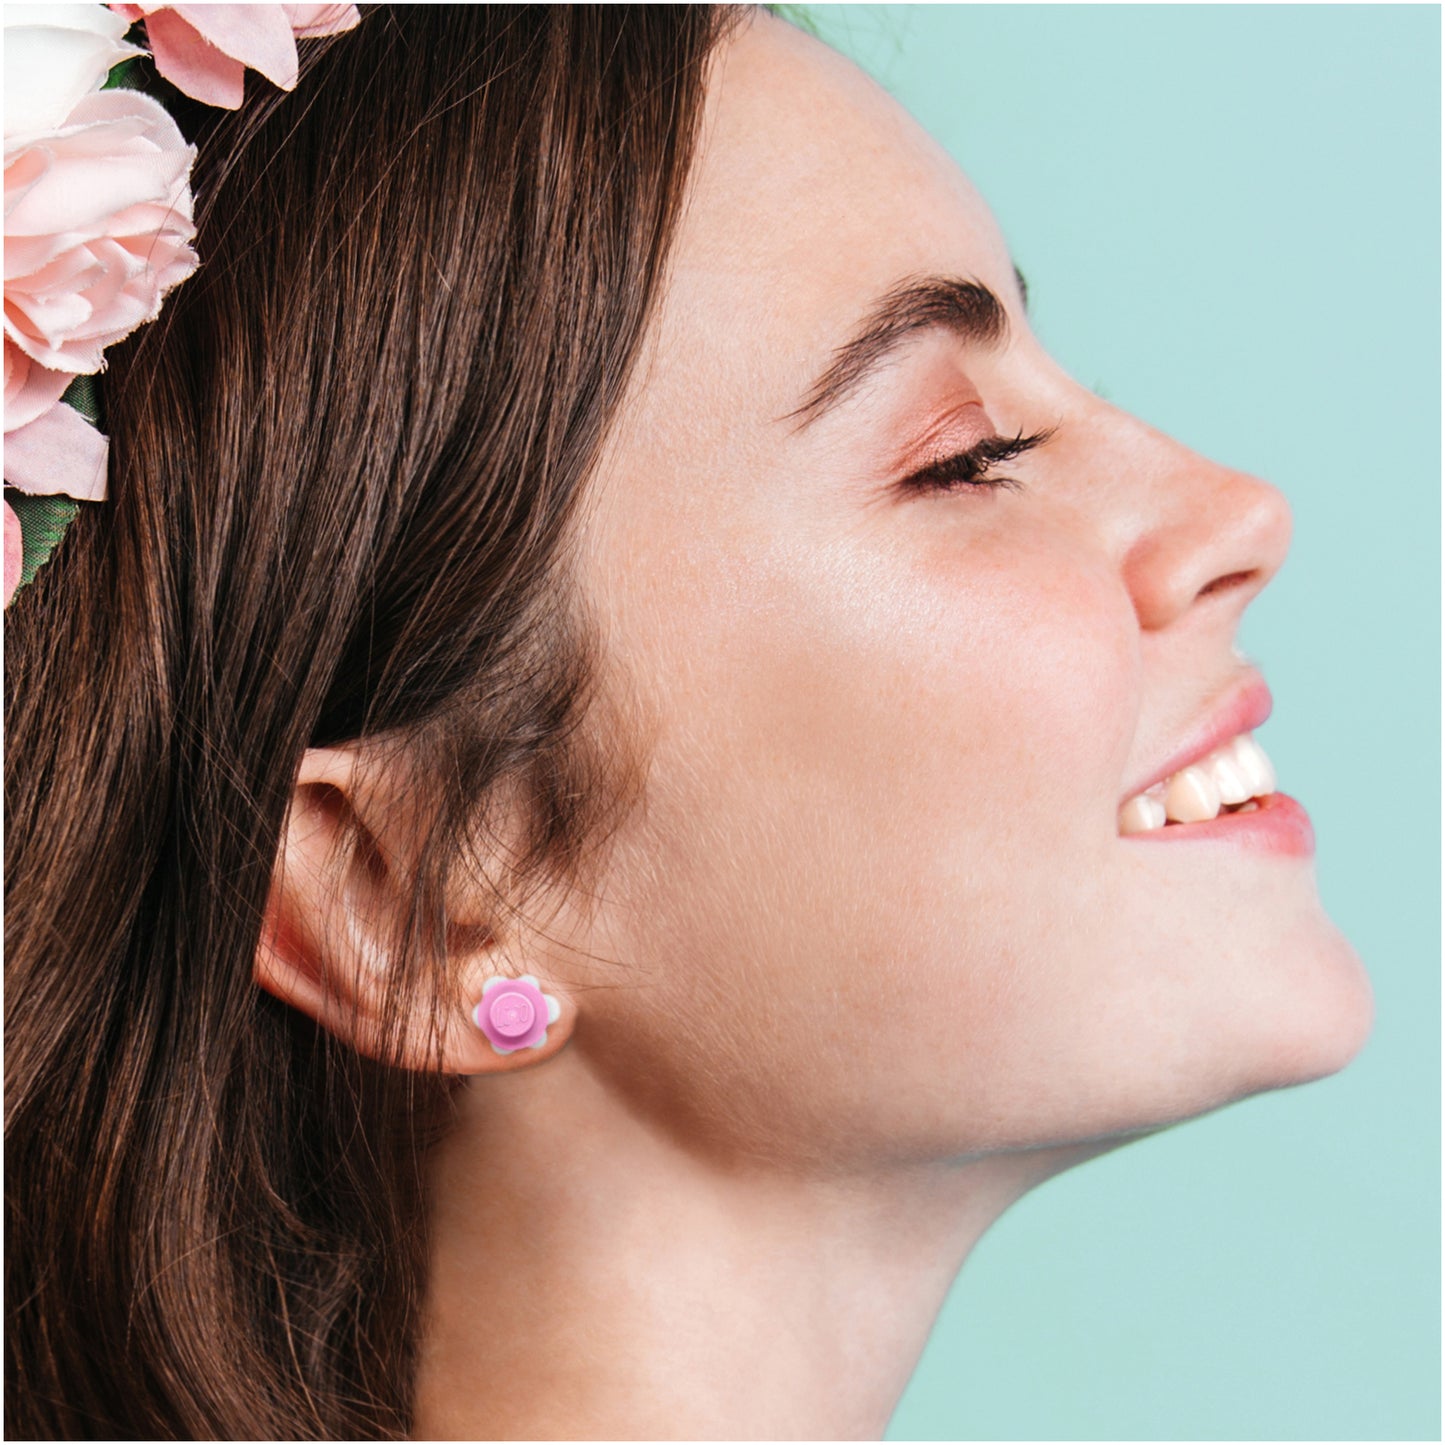 Little Flower Brick Stud Earrings White Pink